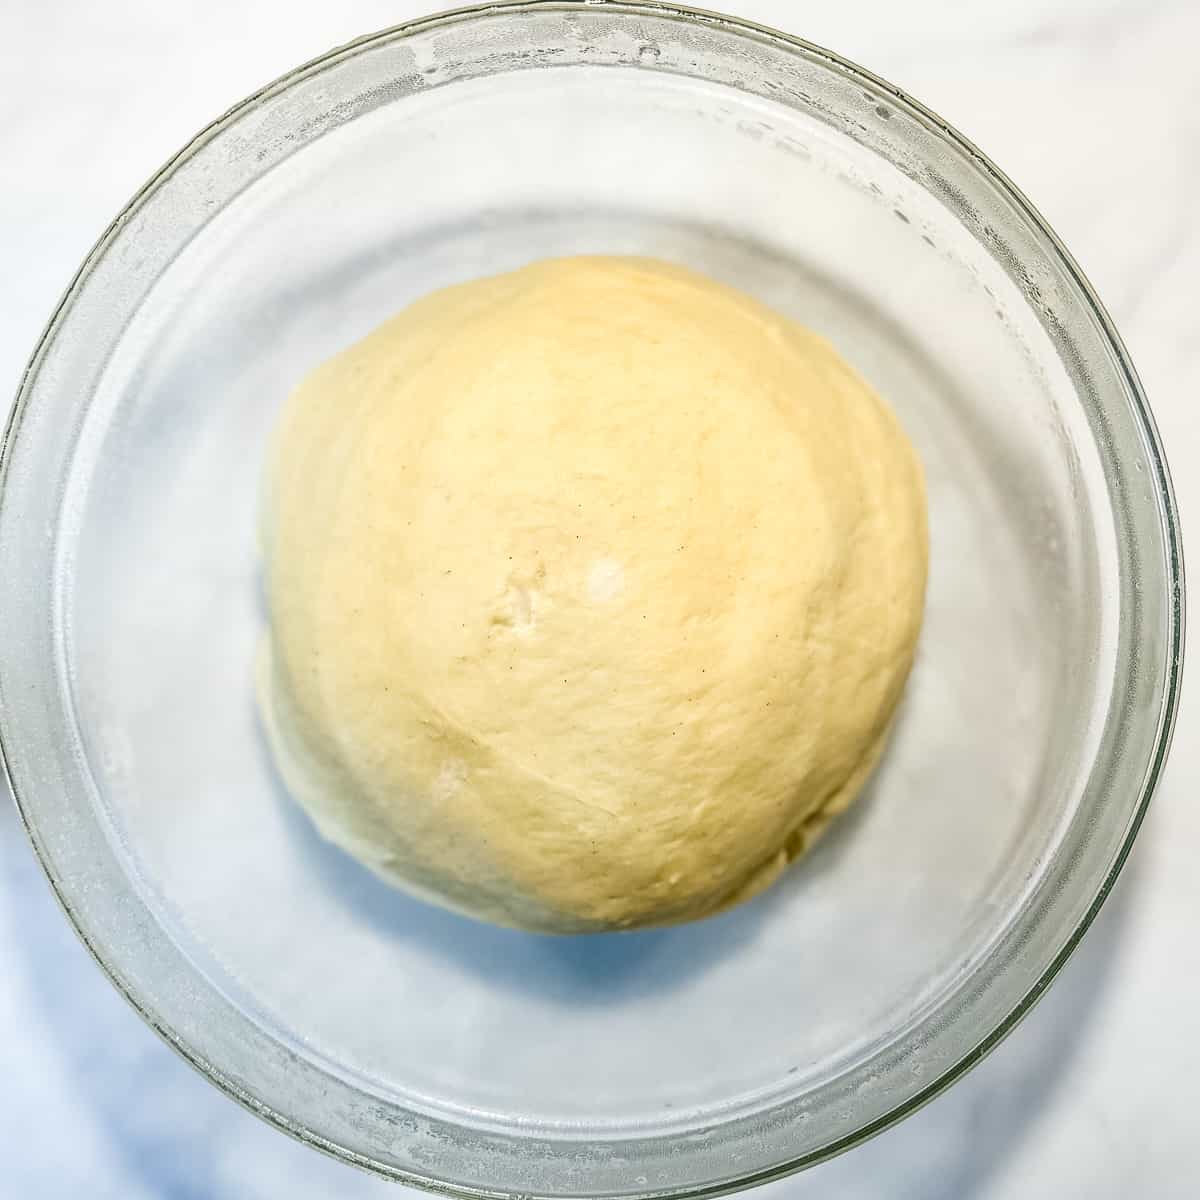 brioche dough after rising in refrigerator overnight.